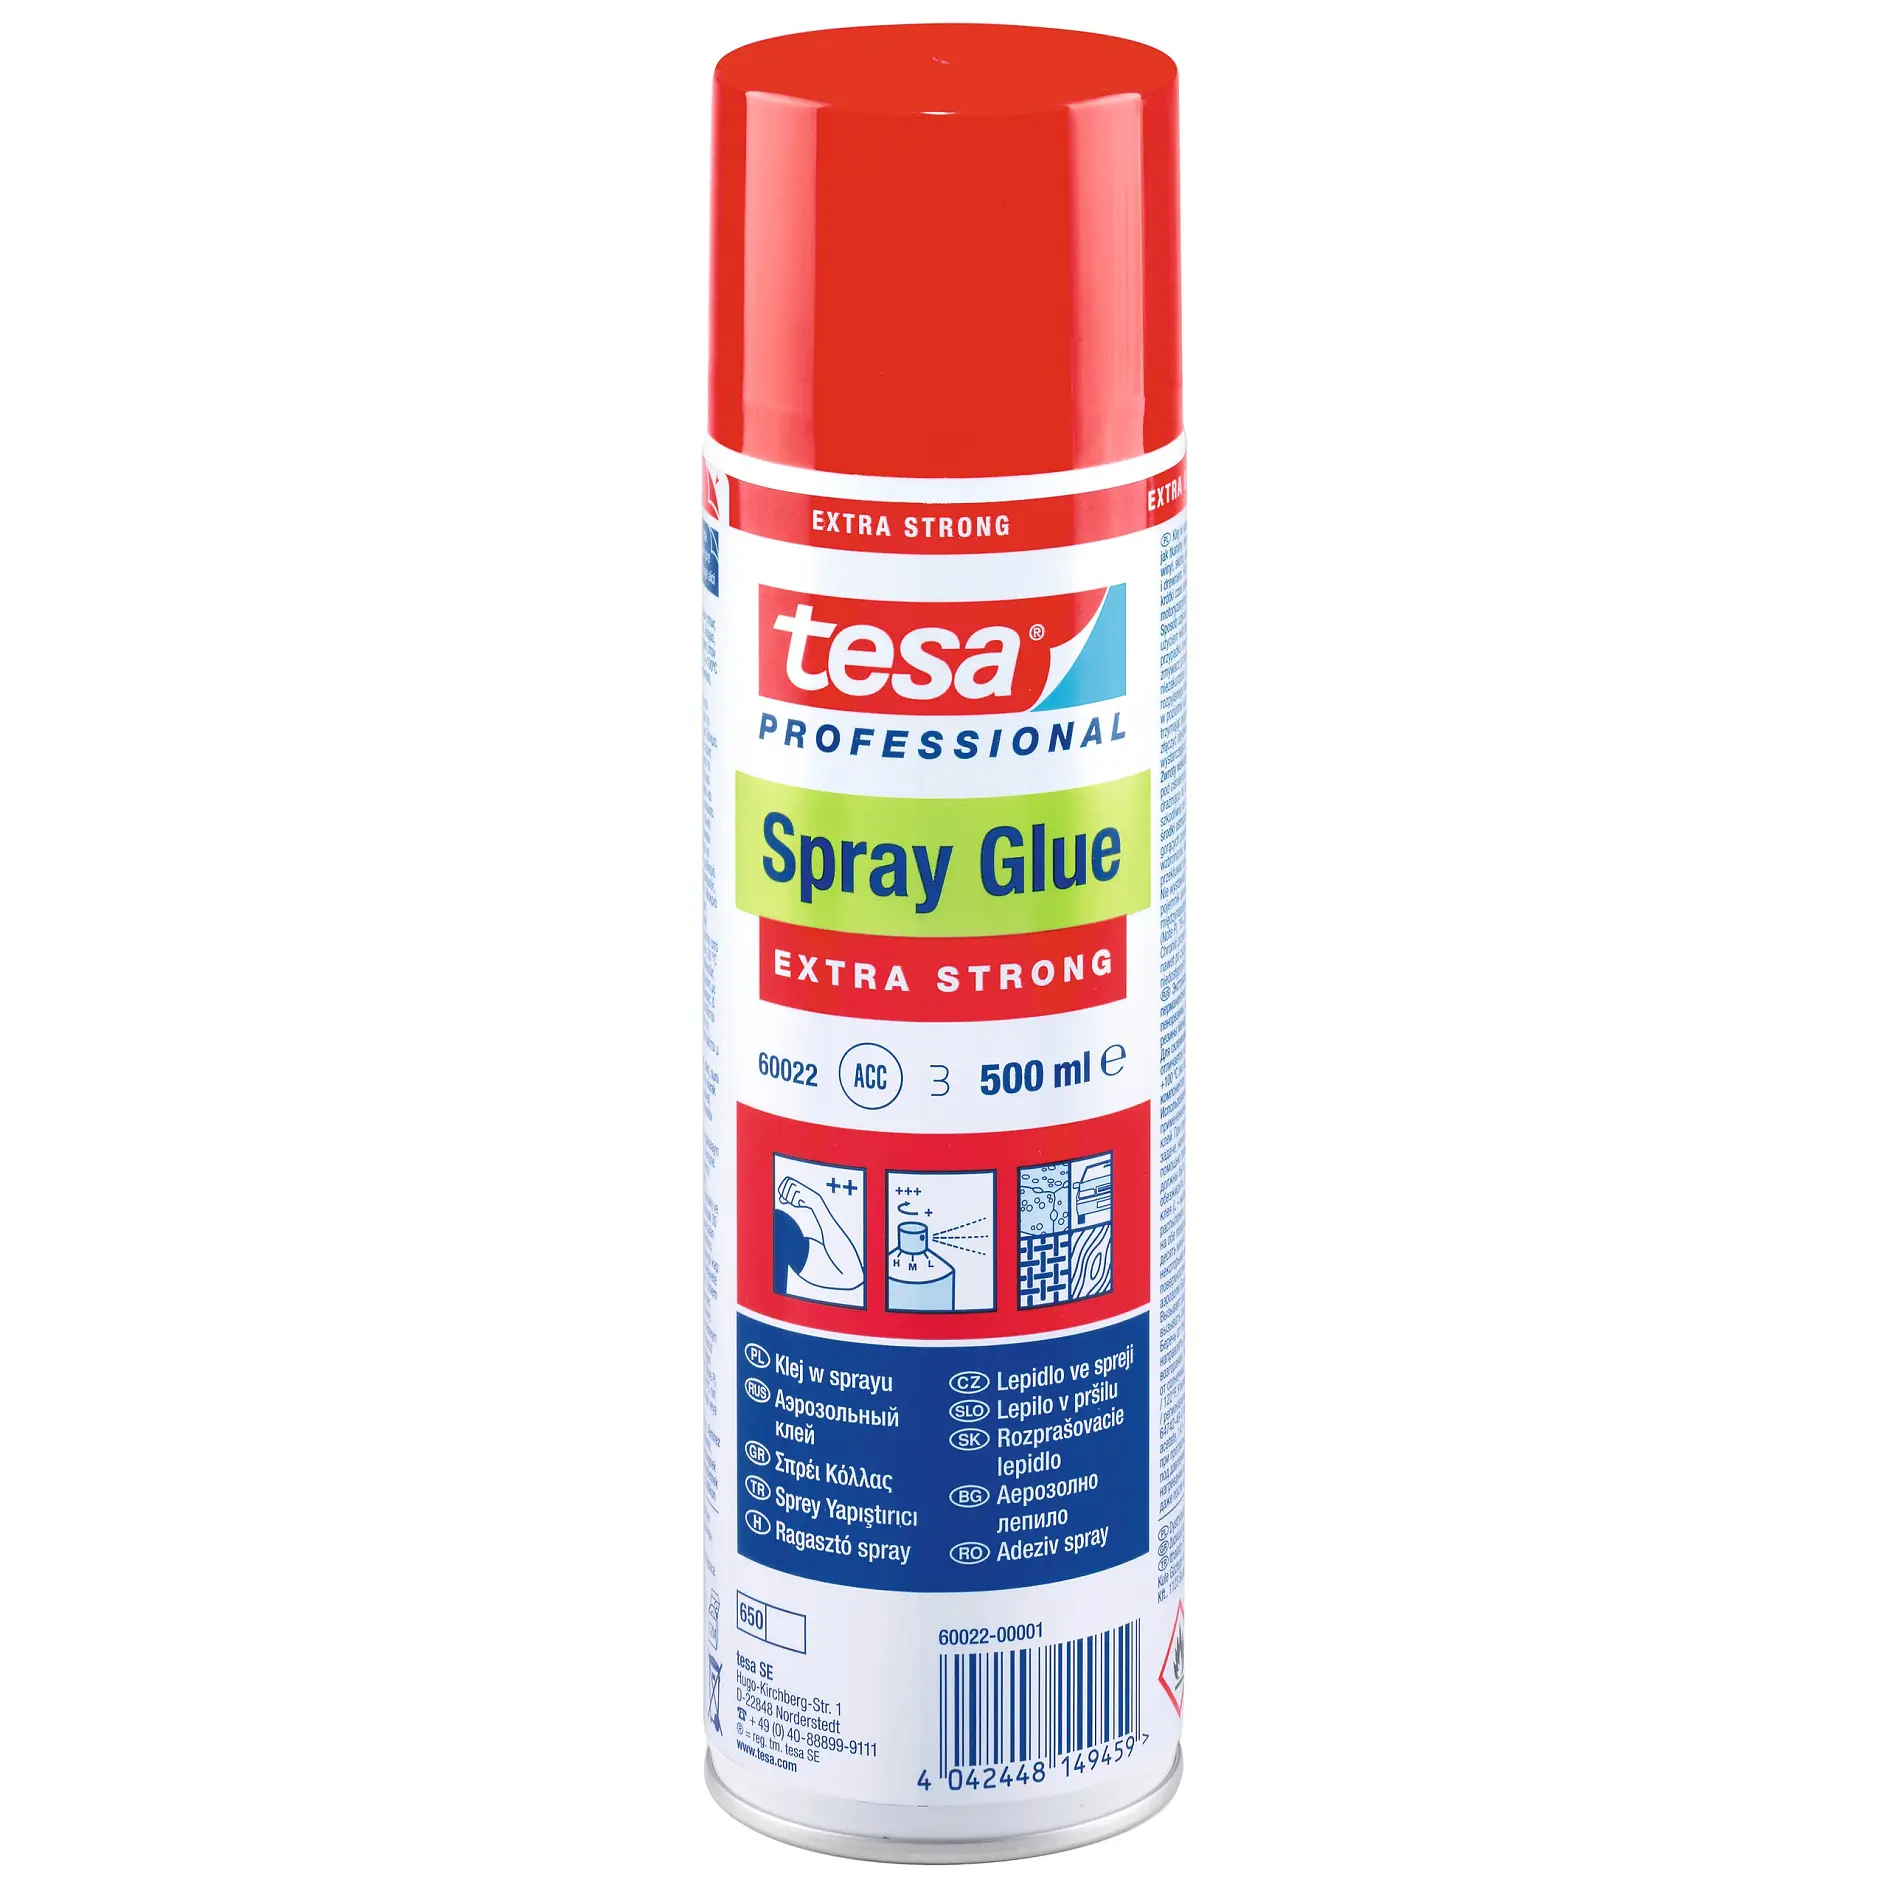 [en-en] tesa Professional Spray Glue Extra Strong LI601